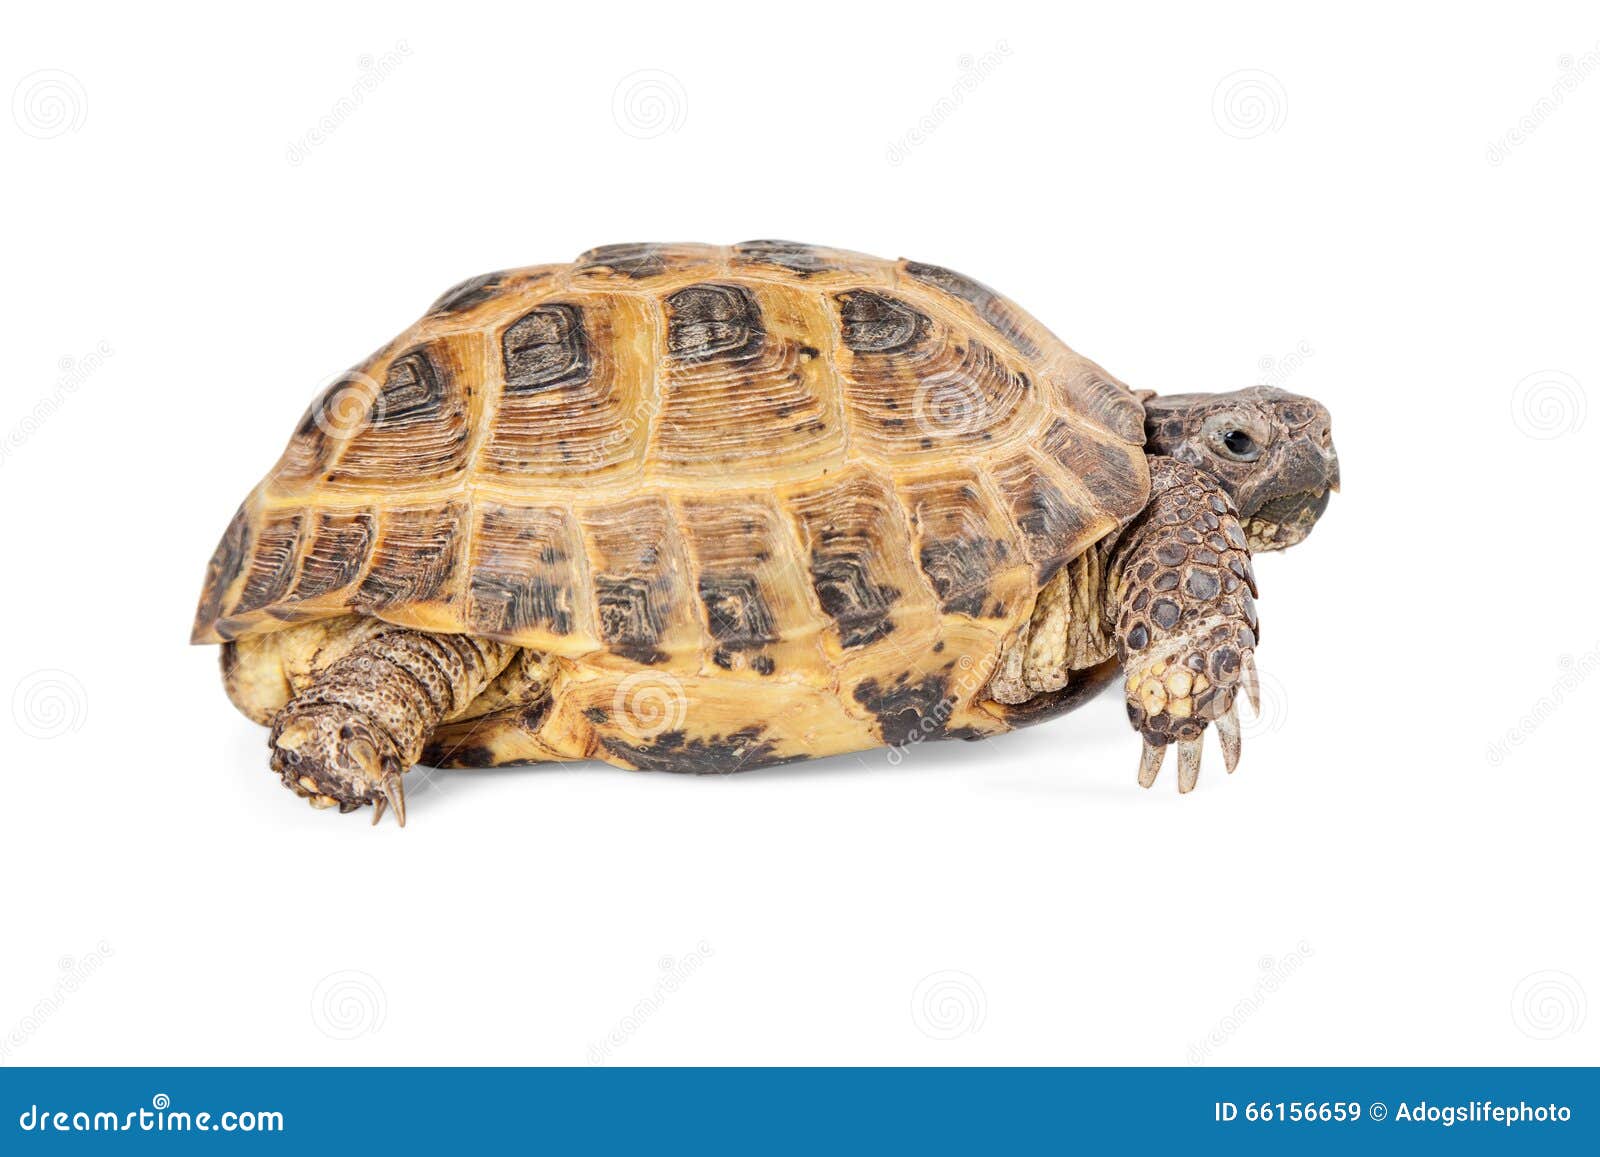 Turtle на русский. Среднеазиатская черепаха. Среднеазиатская черепаха на белом фоне. Сухопутная черепаха на прозрачном фоне. Черепаха домашняя на прозрачном фоне.